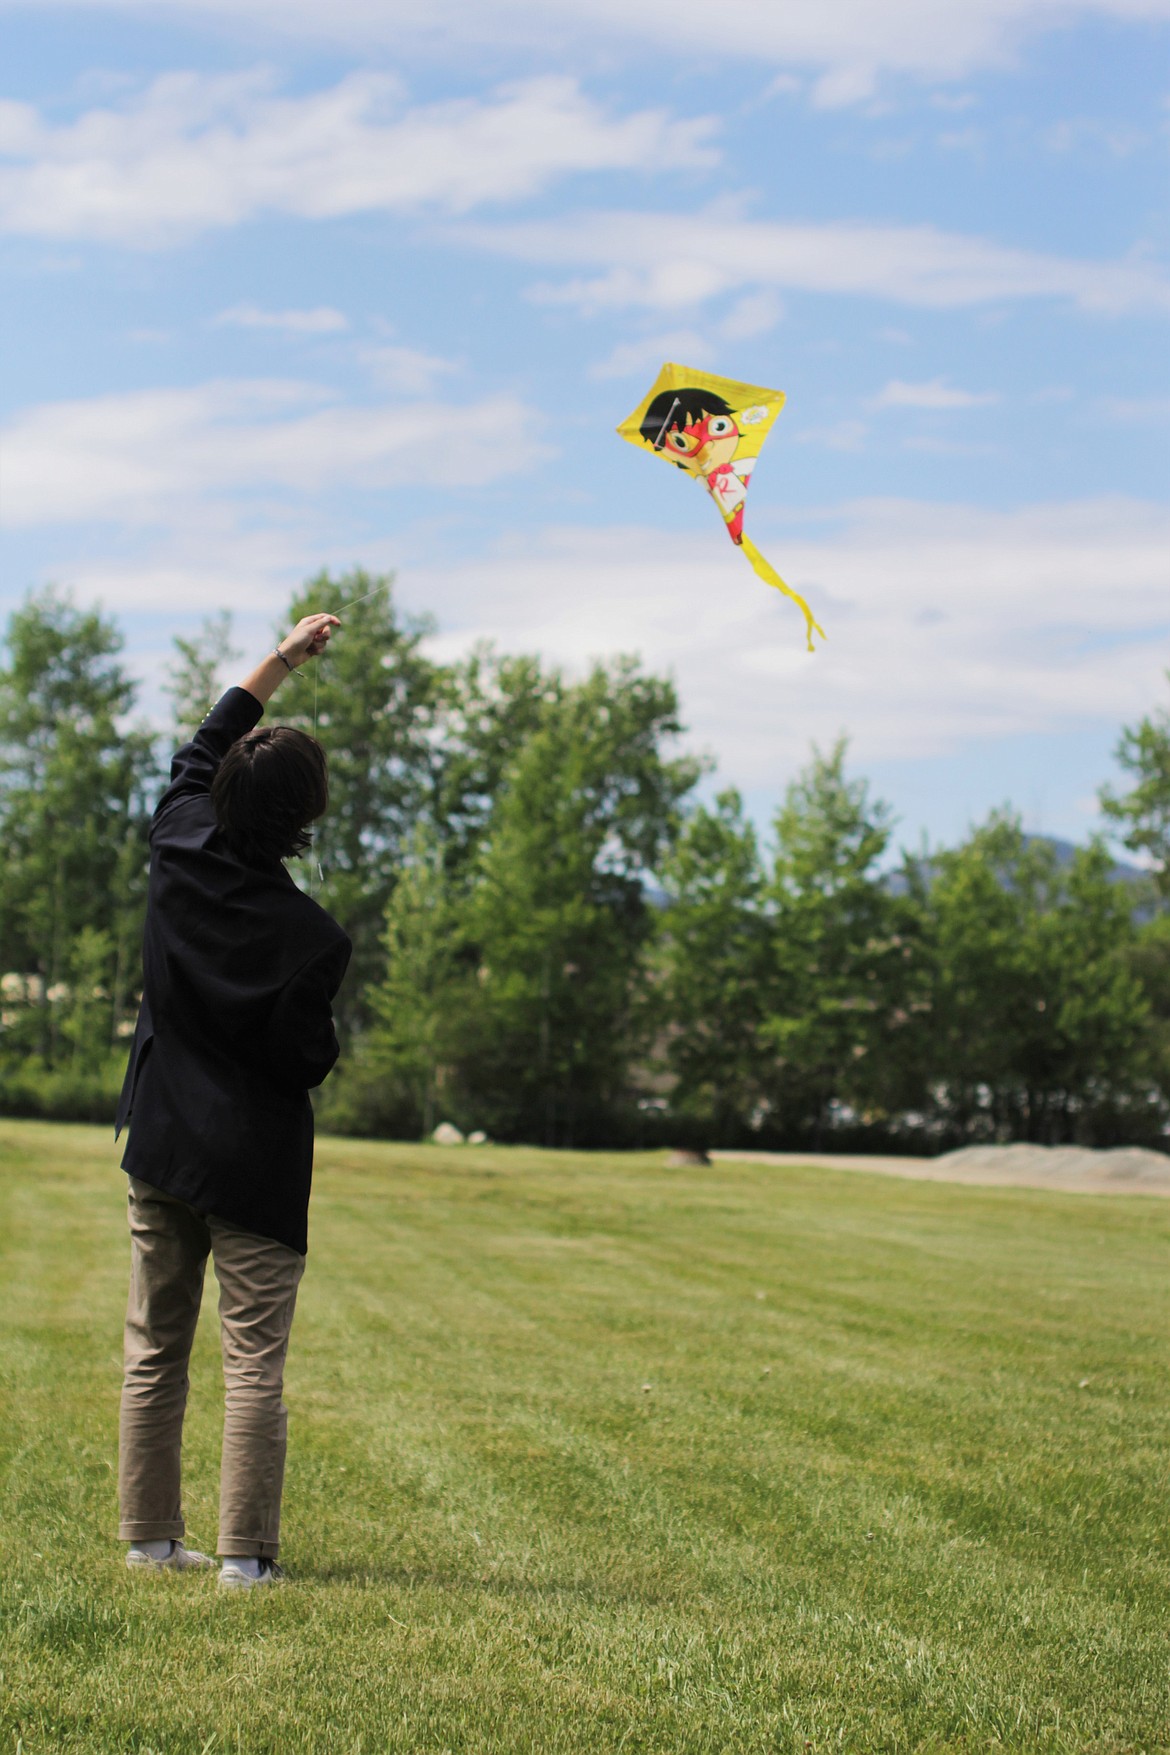 Eoin Eddy flies a kite Friday at Sandpoint High School.